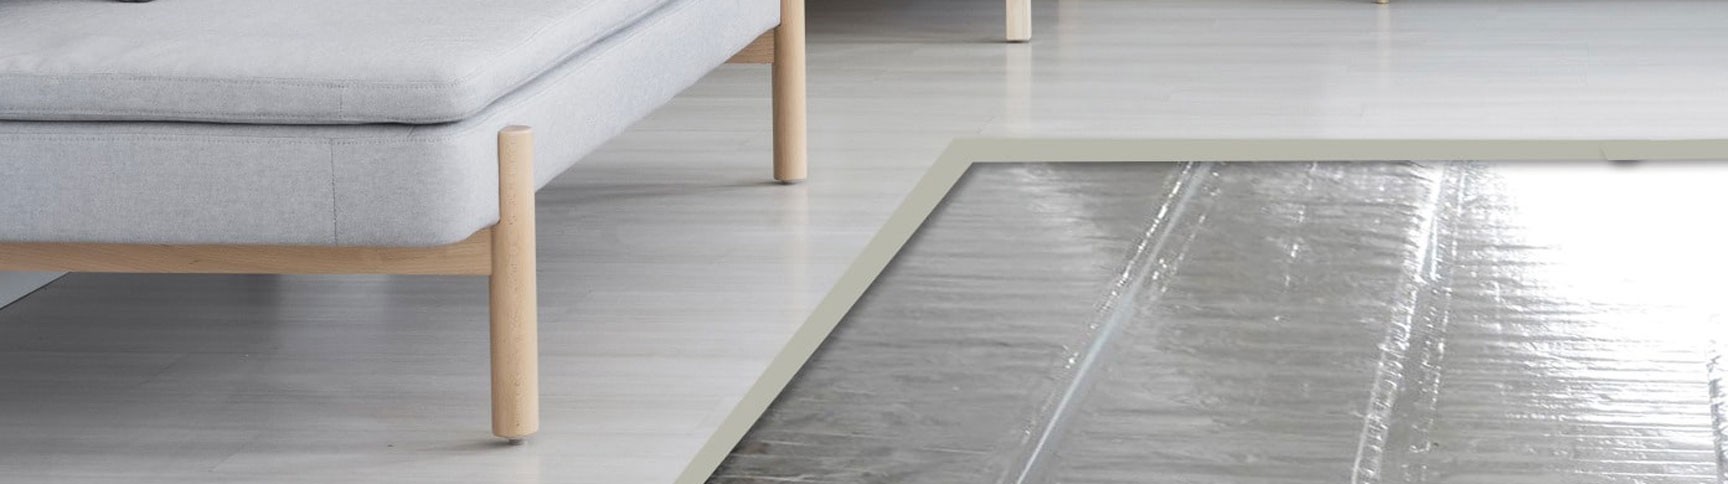 Underfloor Heating Insulation and Underlay | World of Tiles, Bathrooms & Wood Flooring